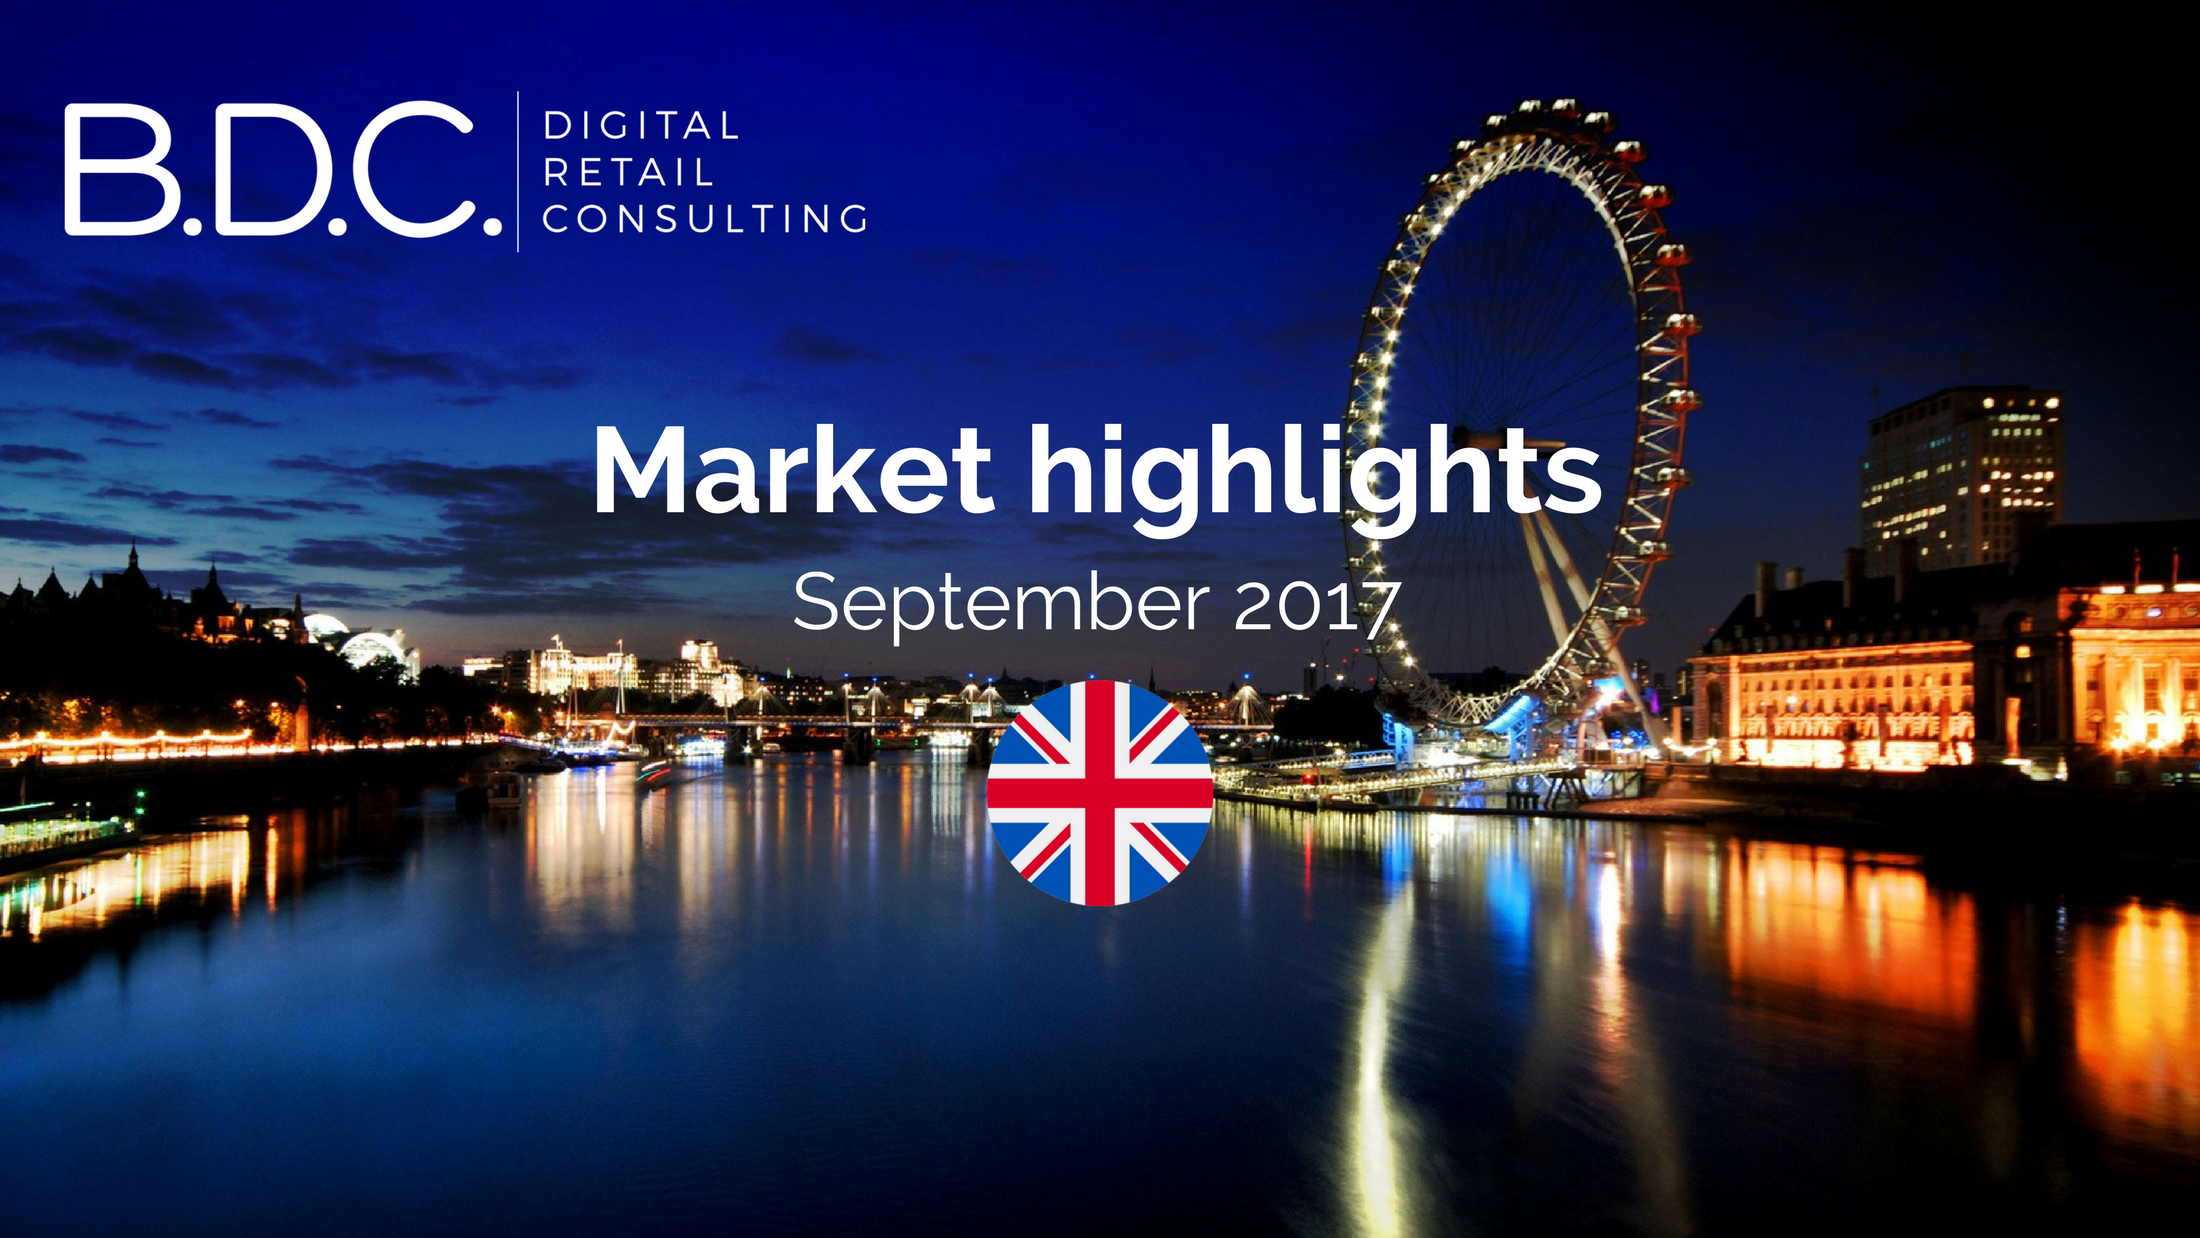 Trends News 9 - Market highlights - September 2017